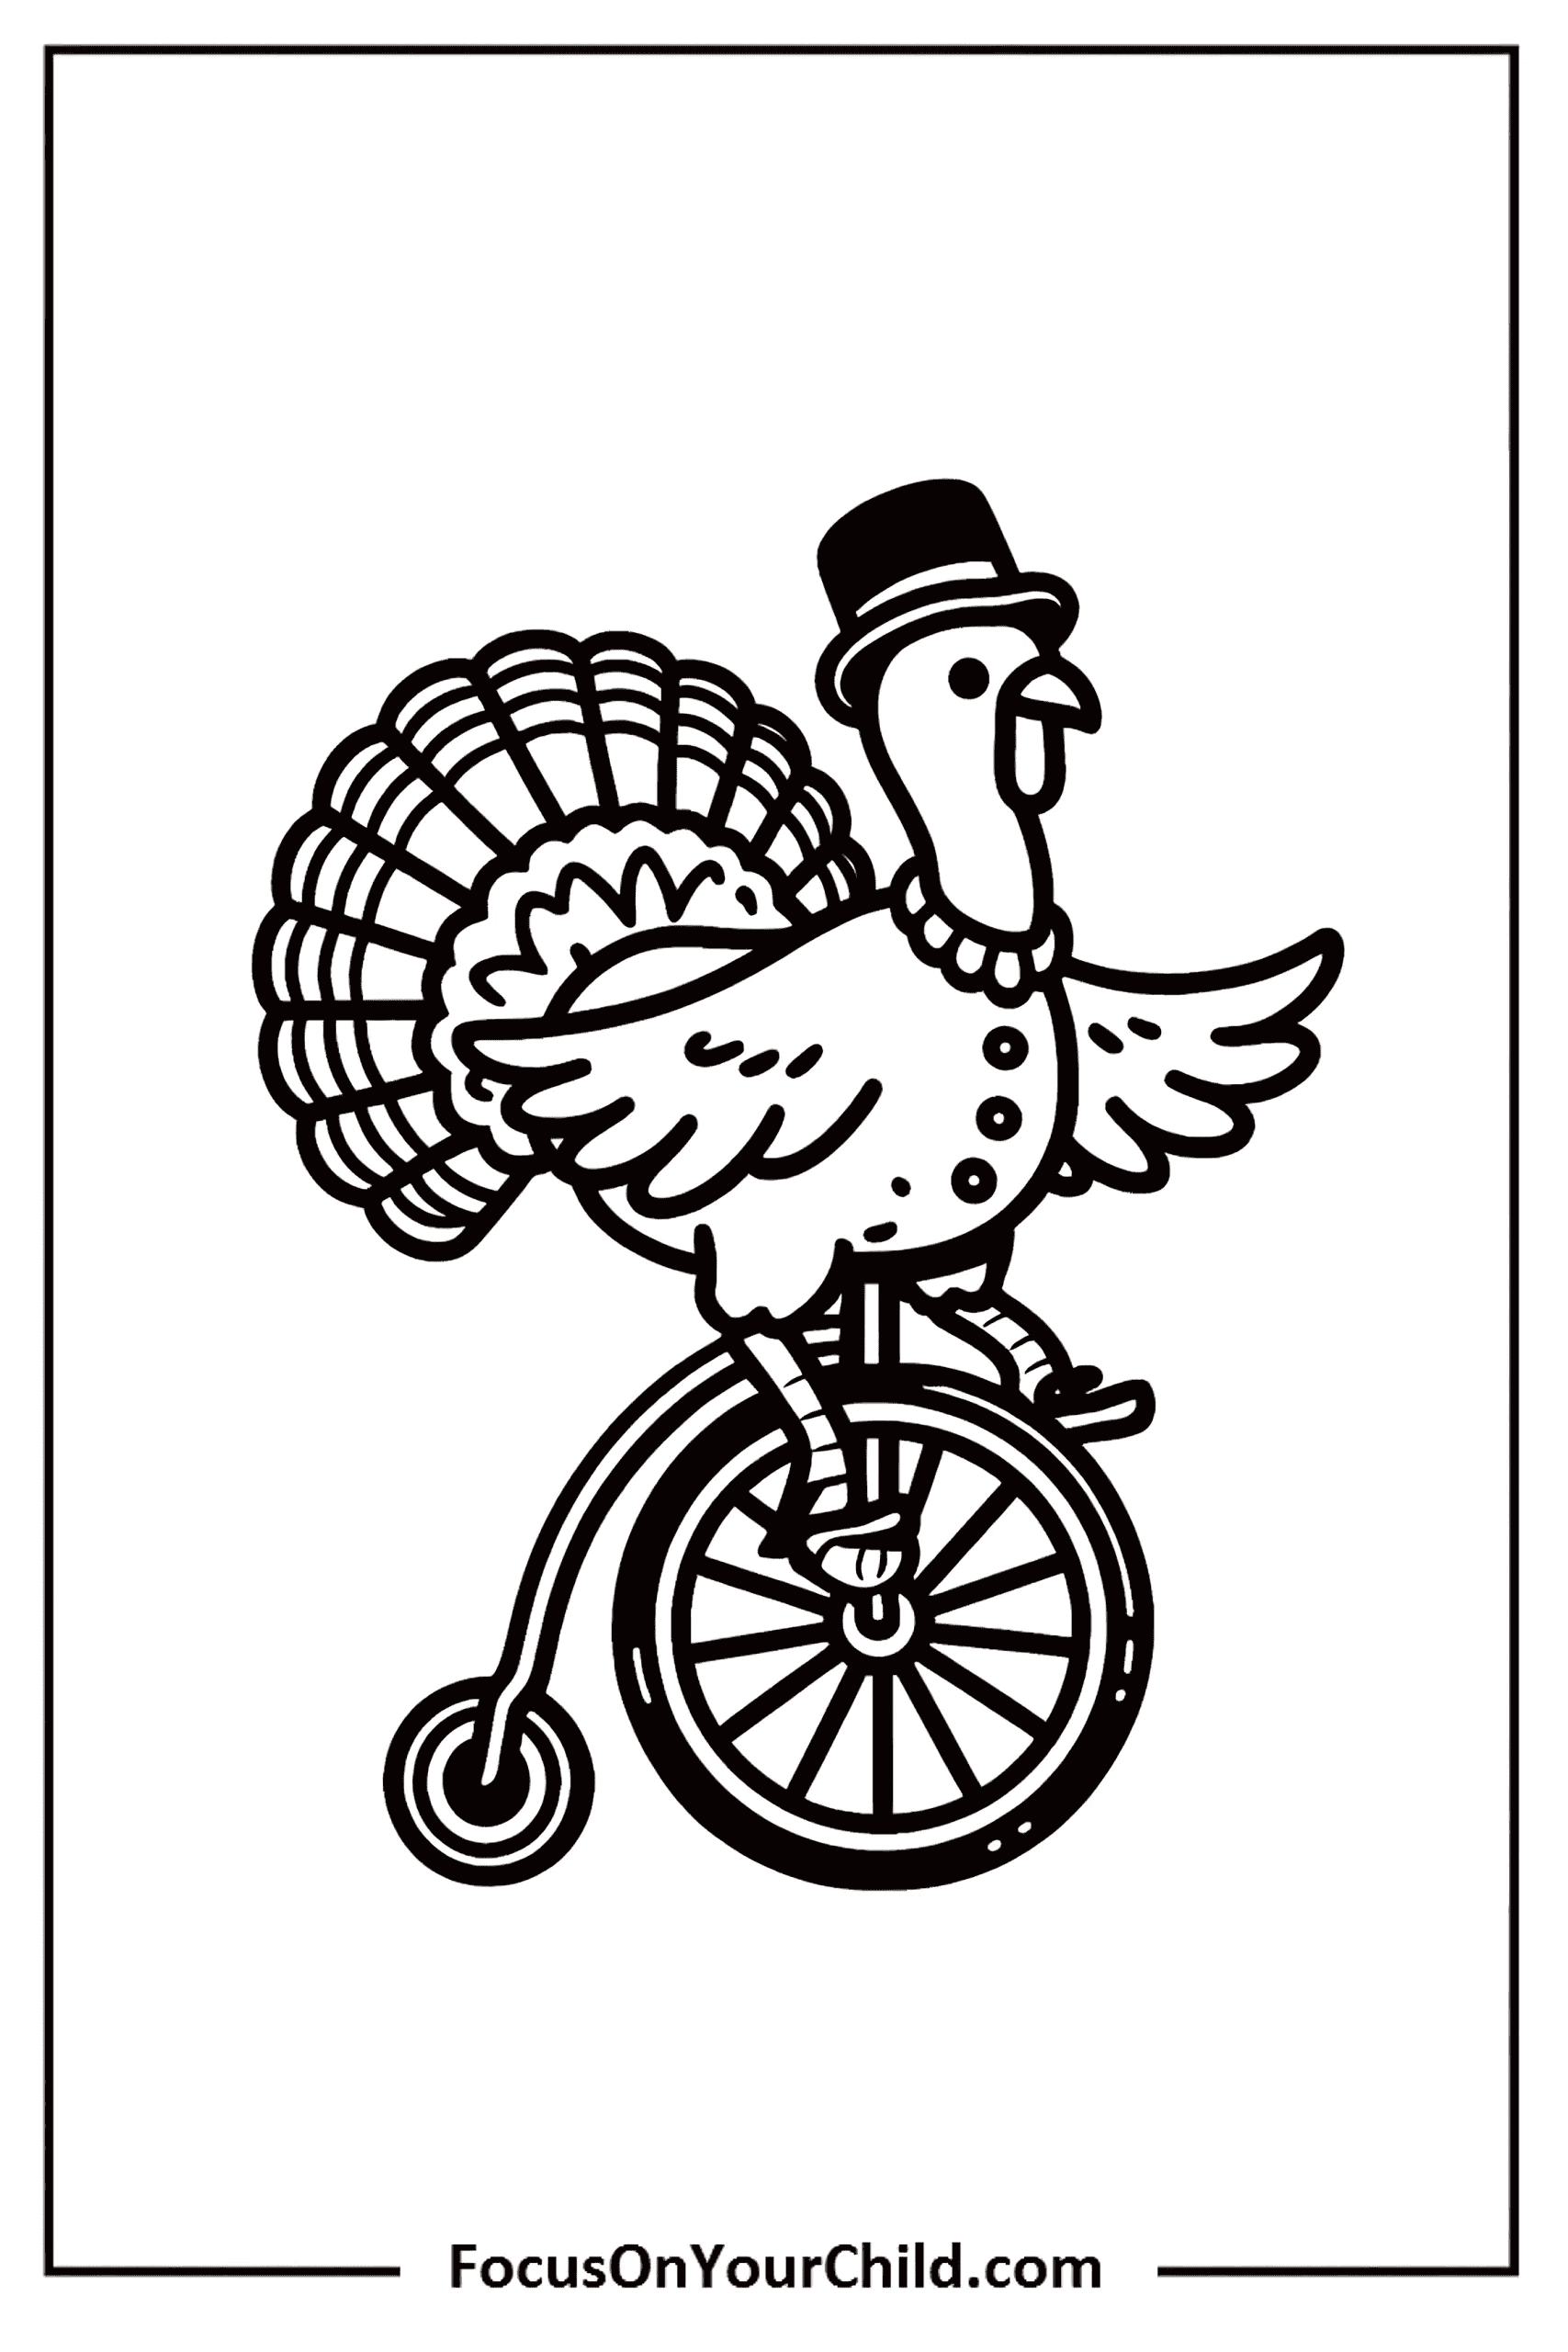 Whimsical cartoon turkey riding a unicycle for FocusOnYourChild.com.